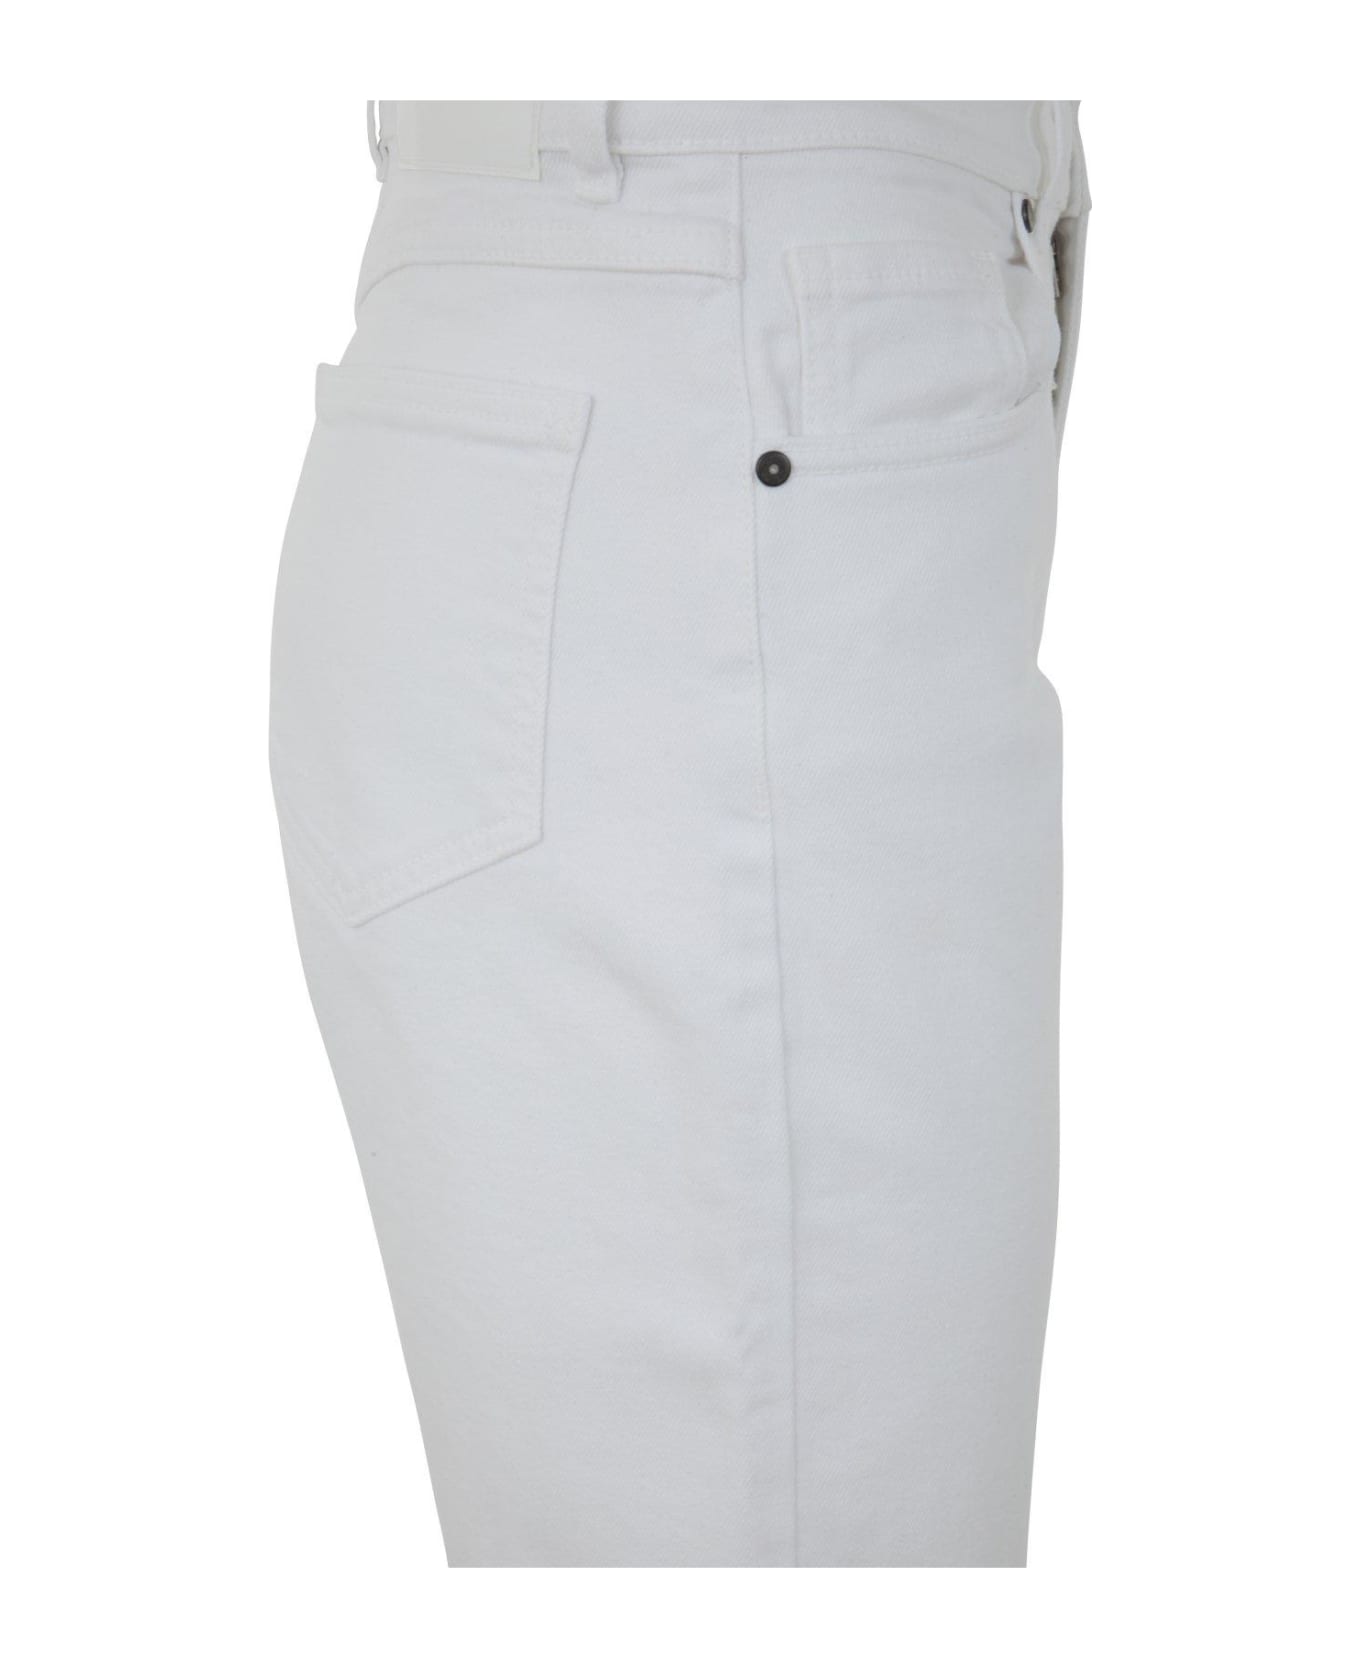 Parosh Cabarex Jeans - White